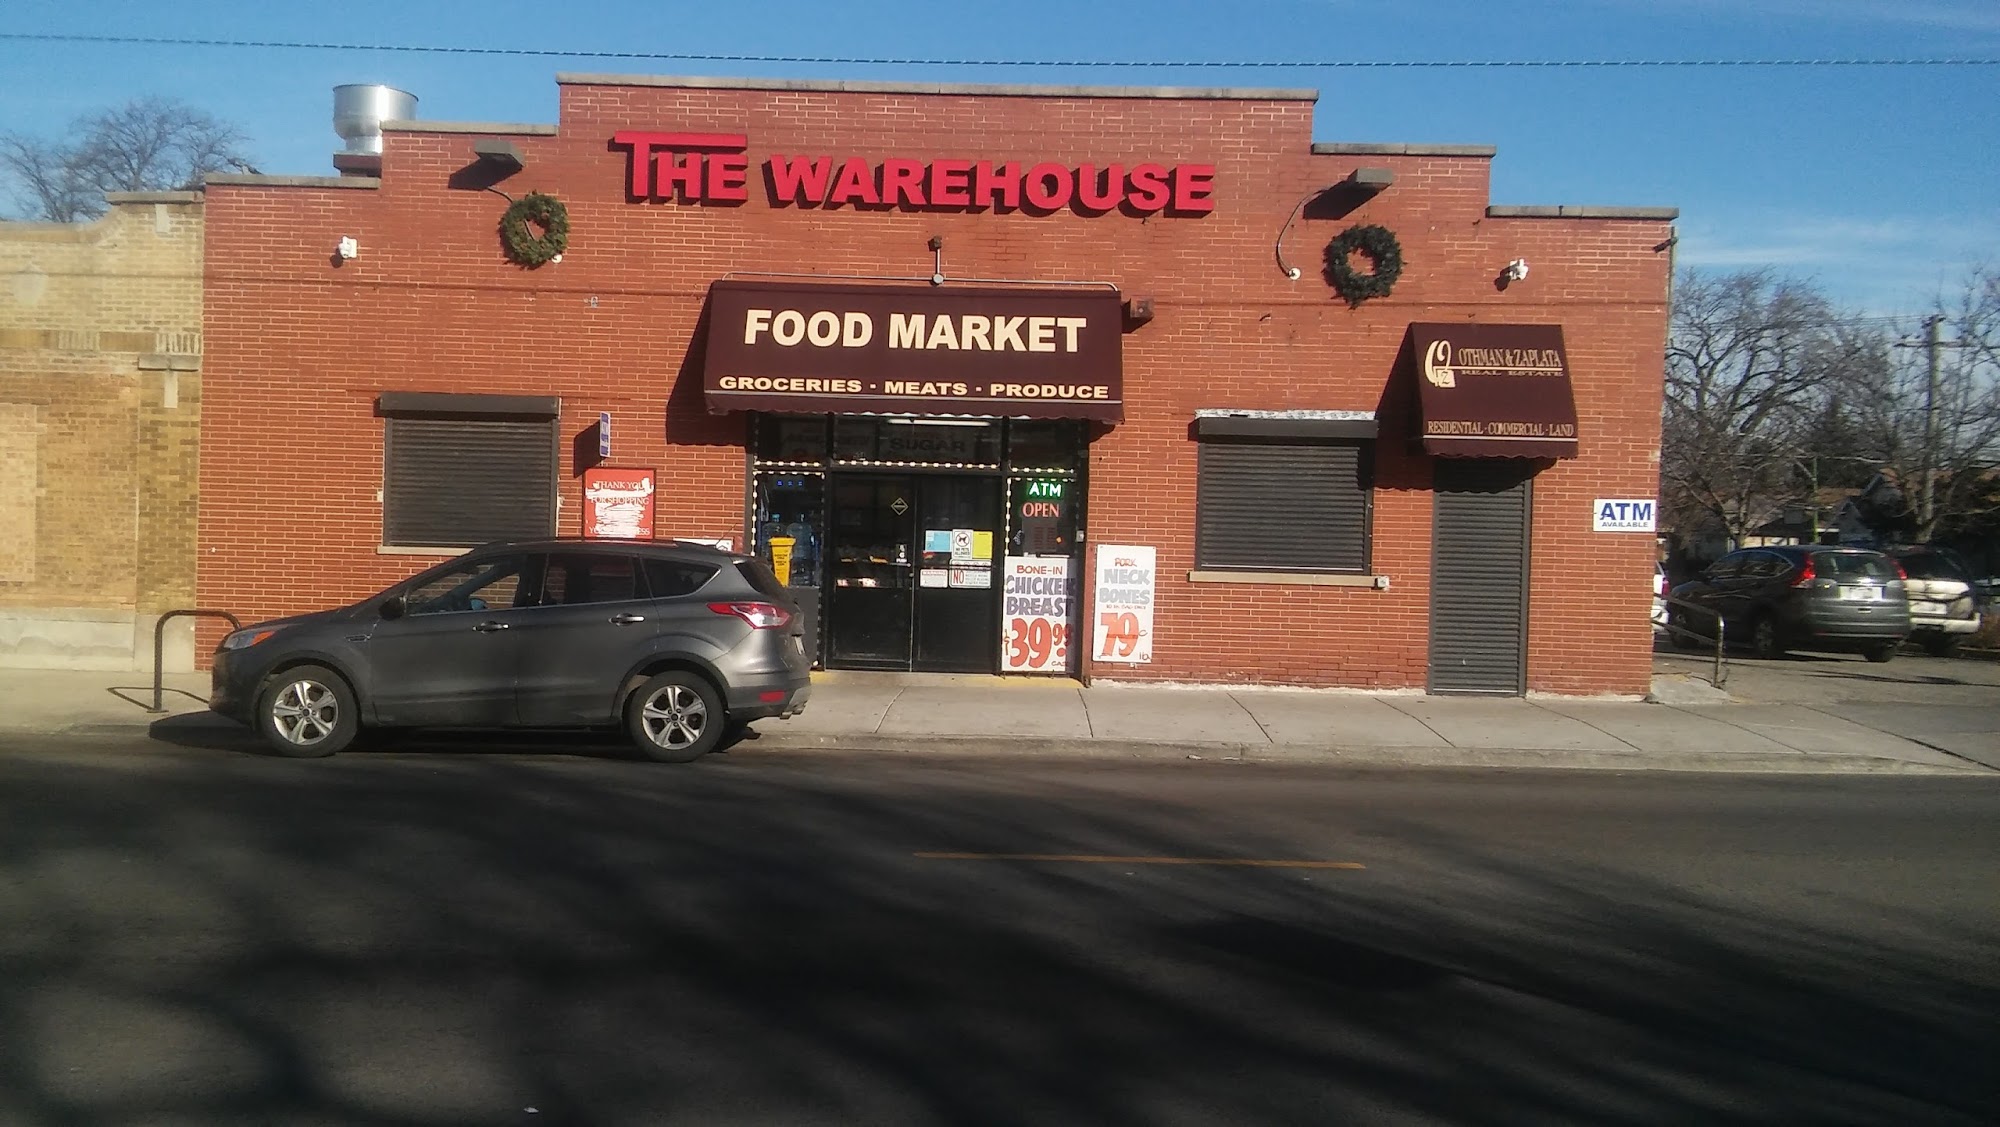 THE WAREHOUSE FOOD MARKET